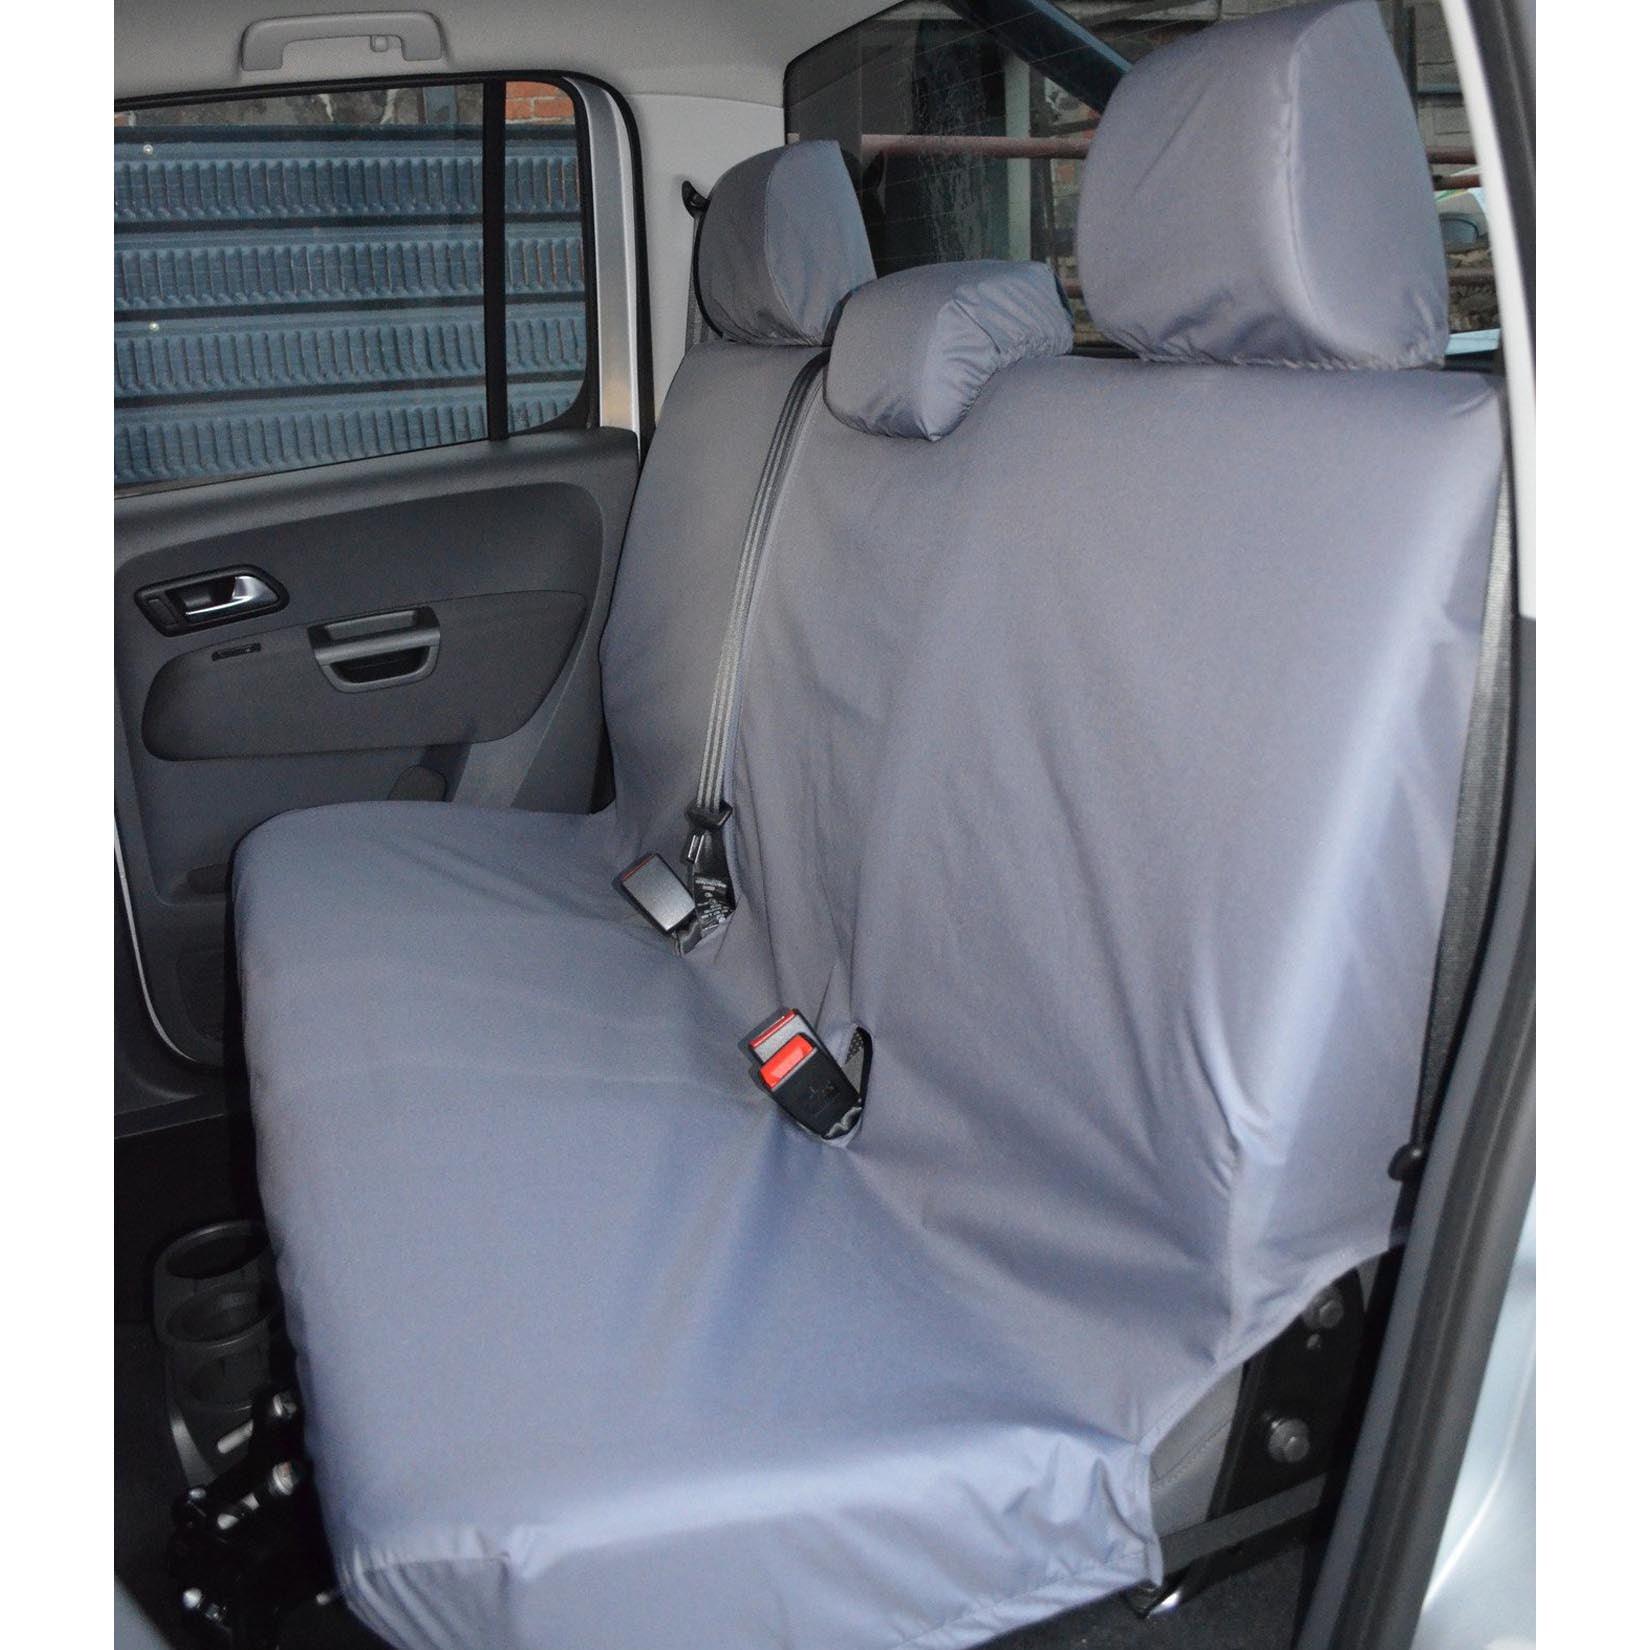 VW AMAROK 2011-2022 – REAR SEAT COVERS – GREY - Storm Xccessories2